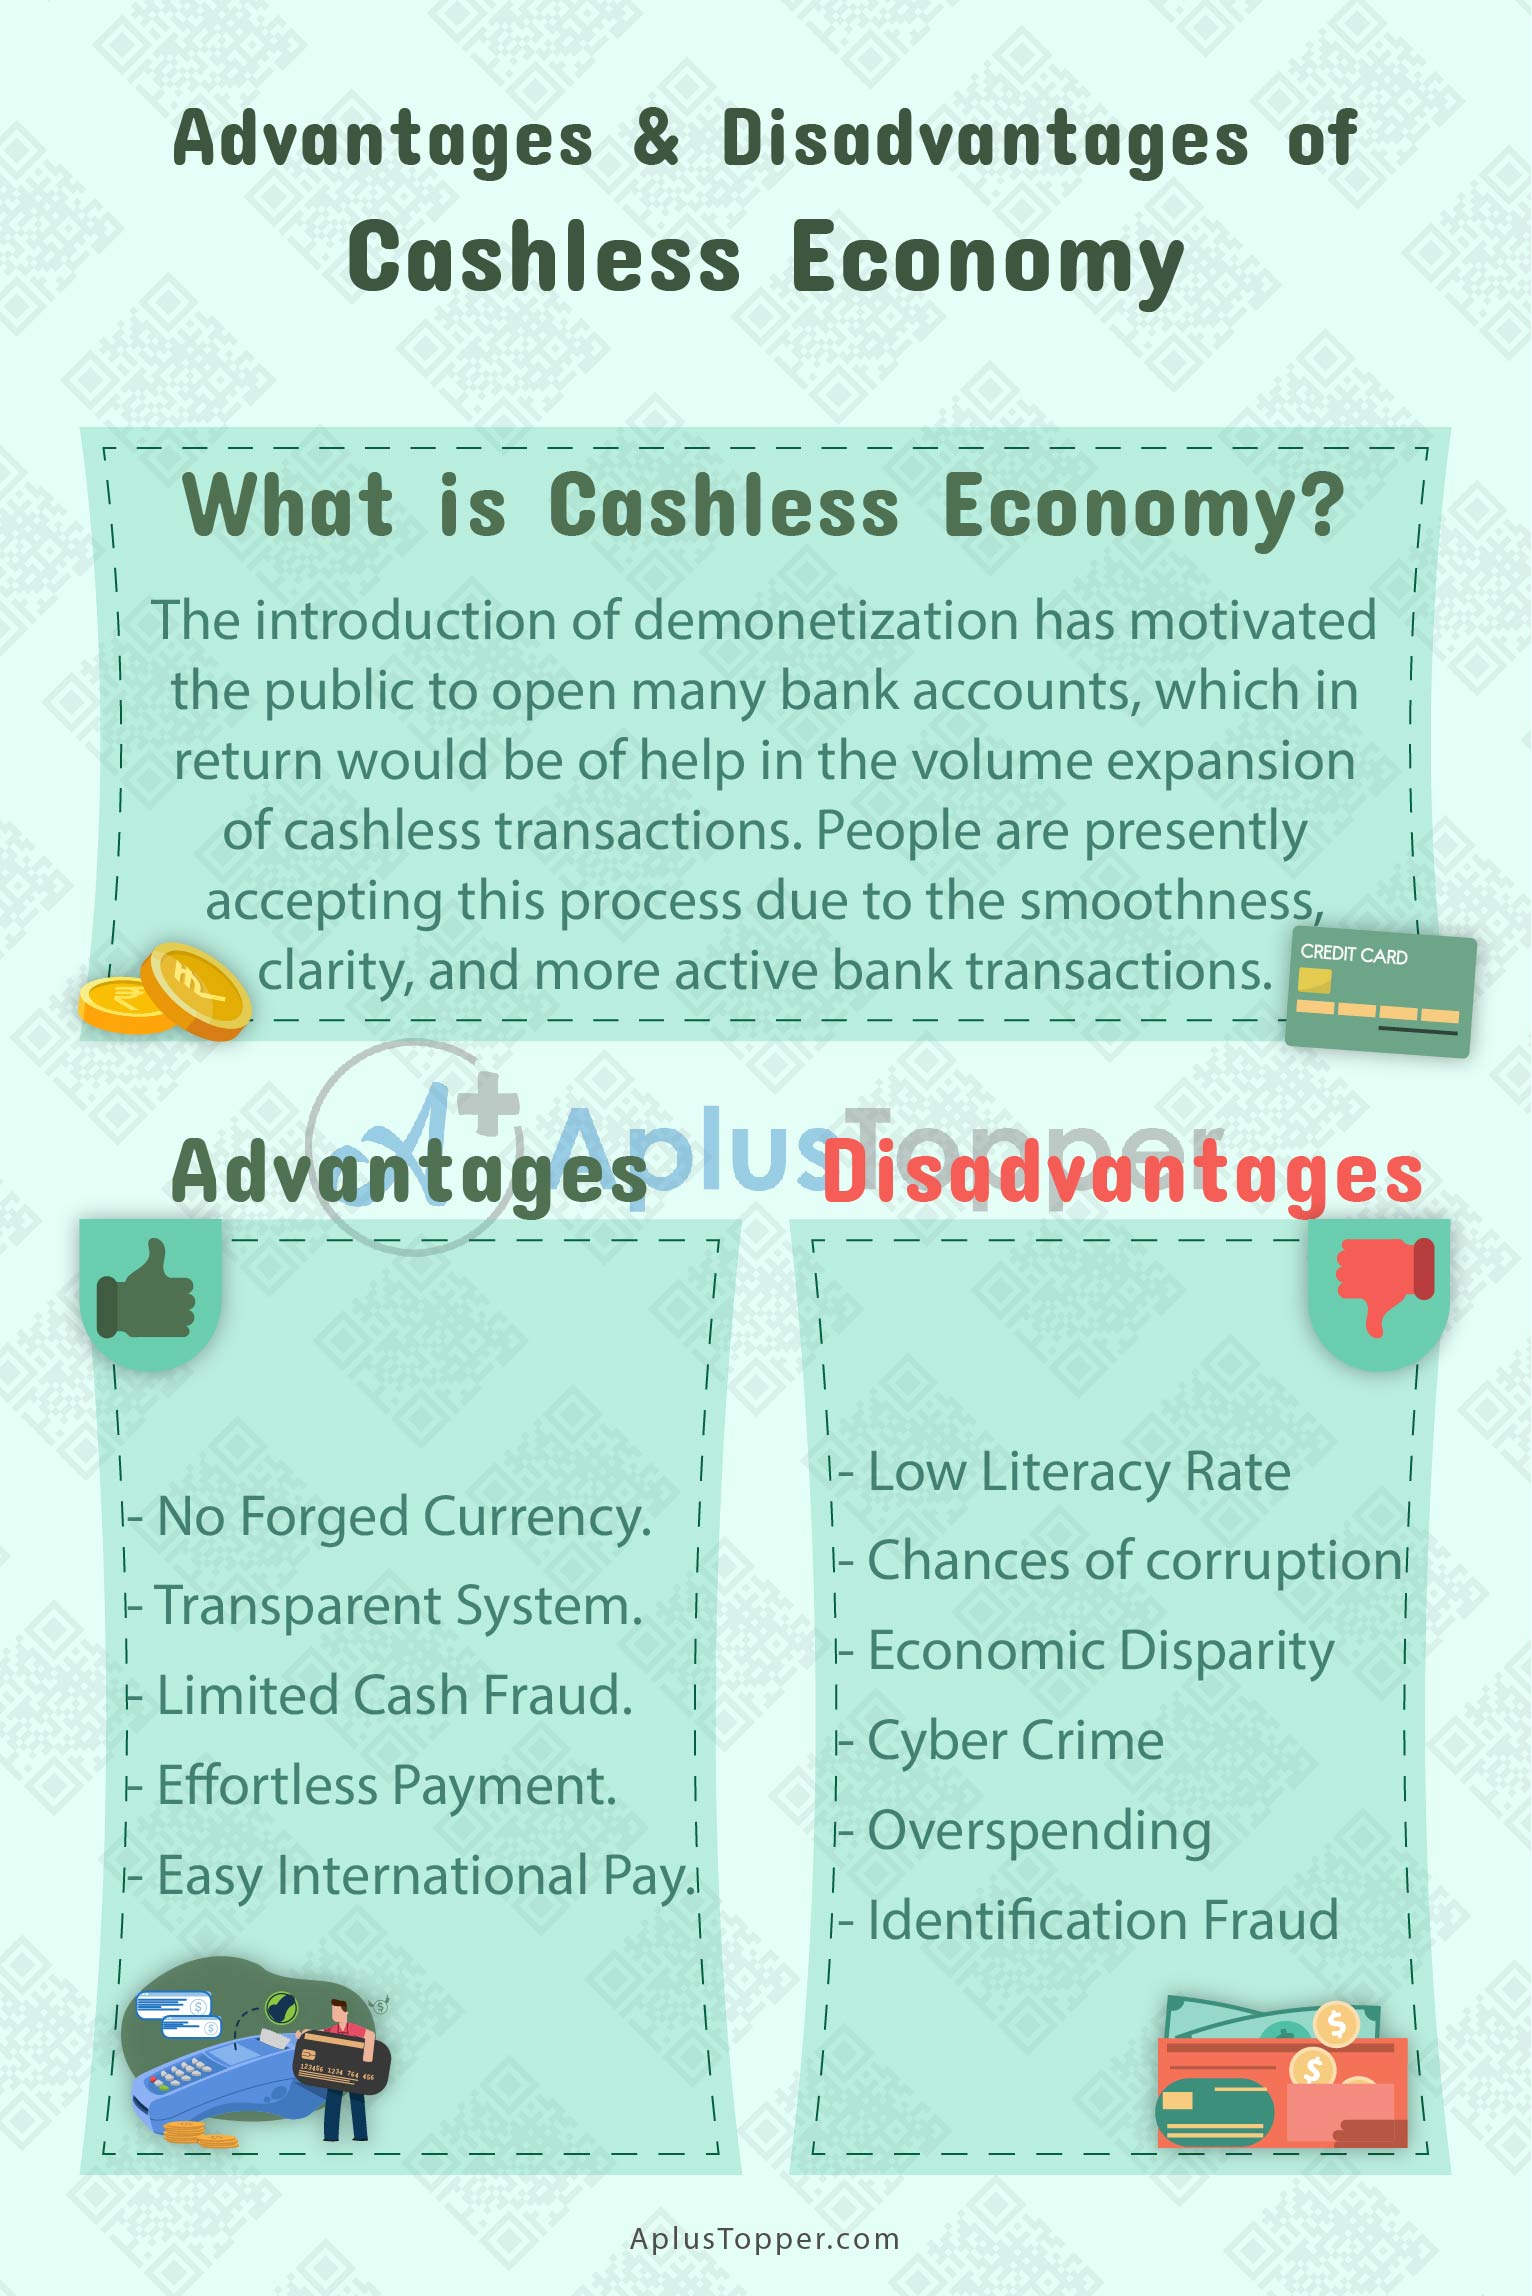 Advantages and Disadvantages of Cashless Economy 2